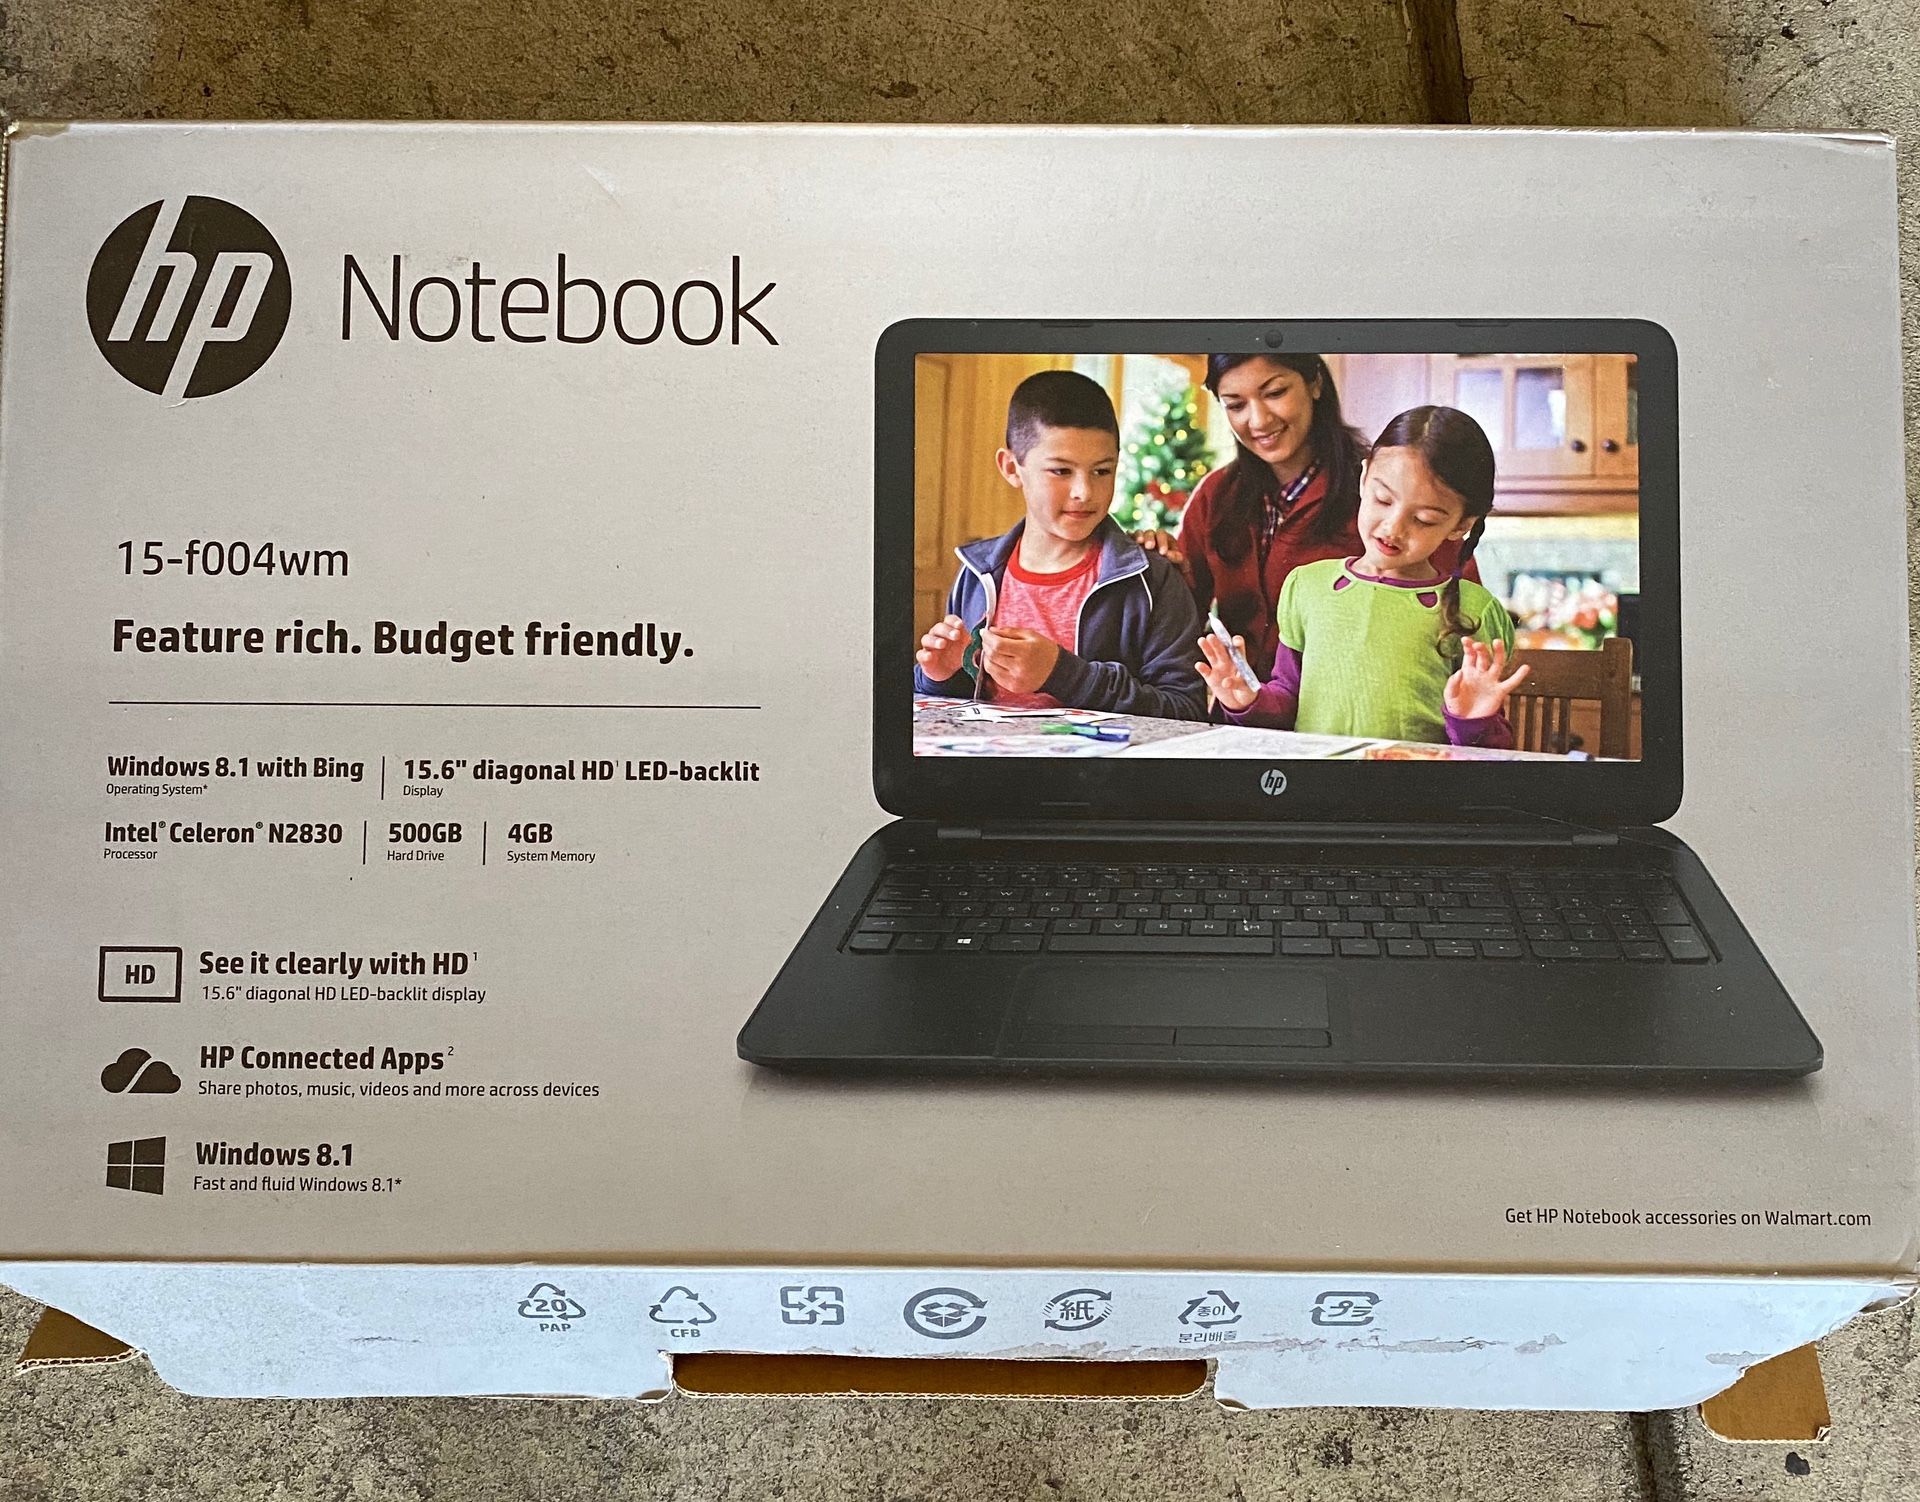 HP Notebook windows 8.1 / 15.6” diagonal HD